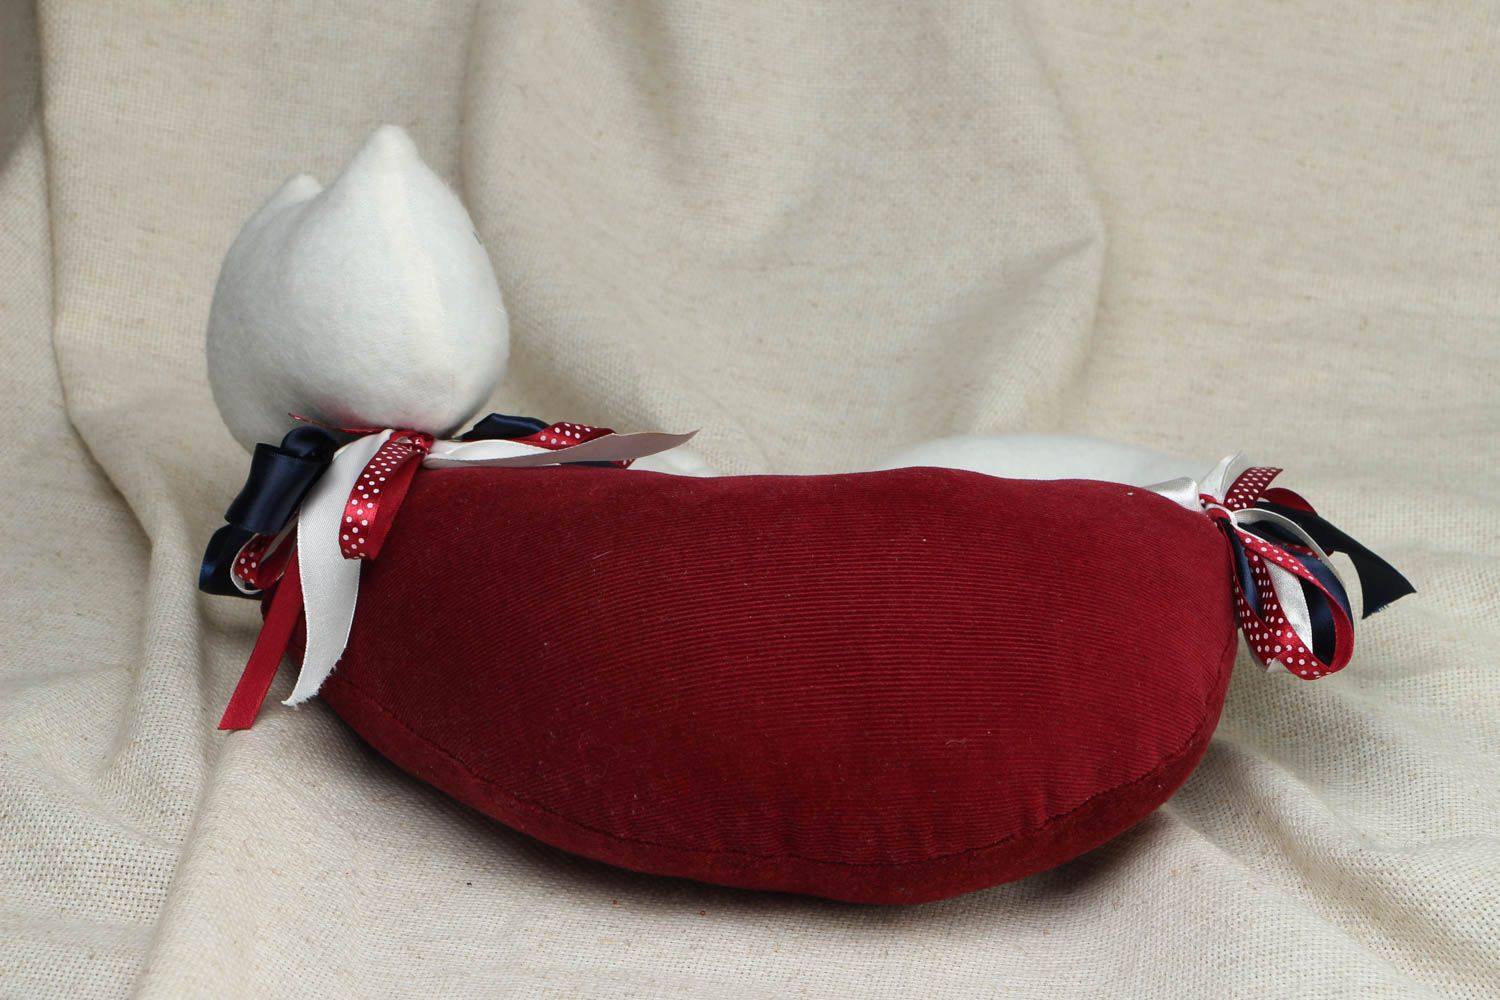 Мягкая игрушка-подушка в виде спящего кота фото 3